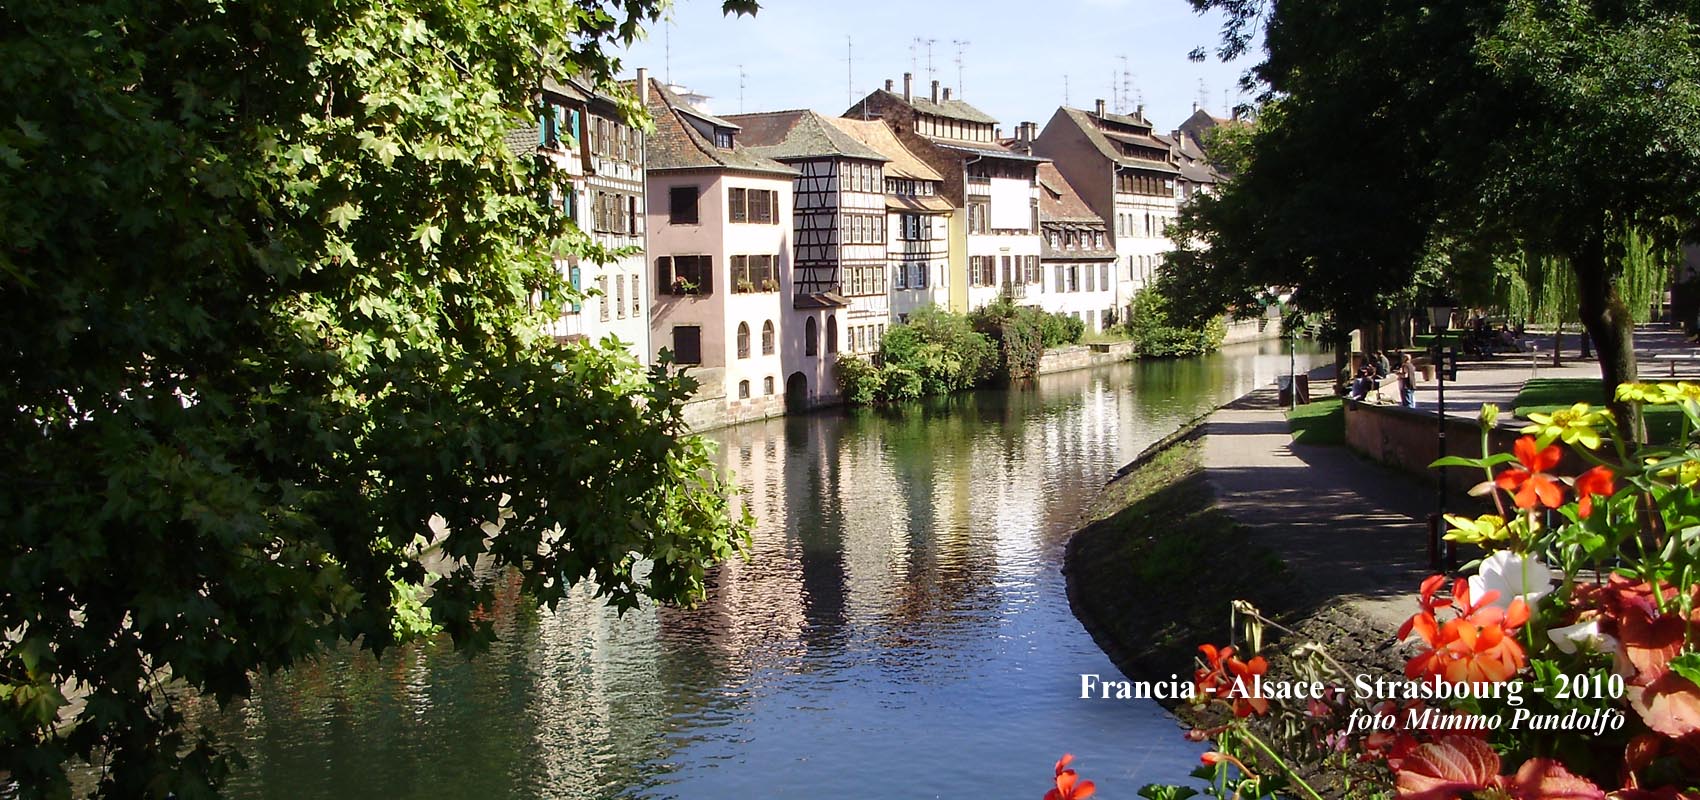 Francia, Alsace - Strasbourg - 2015